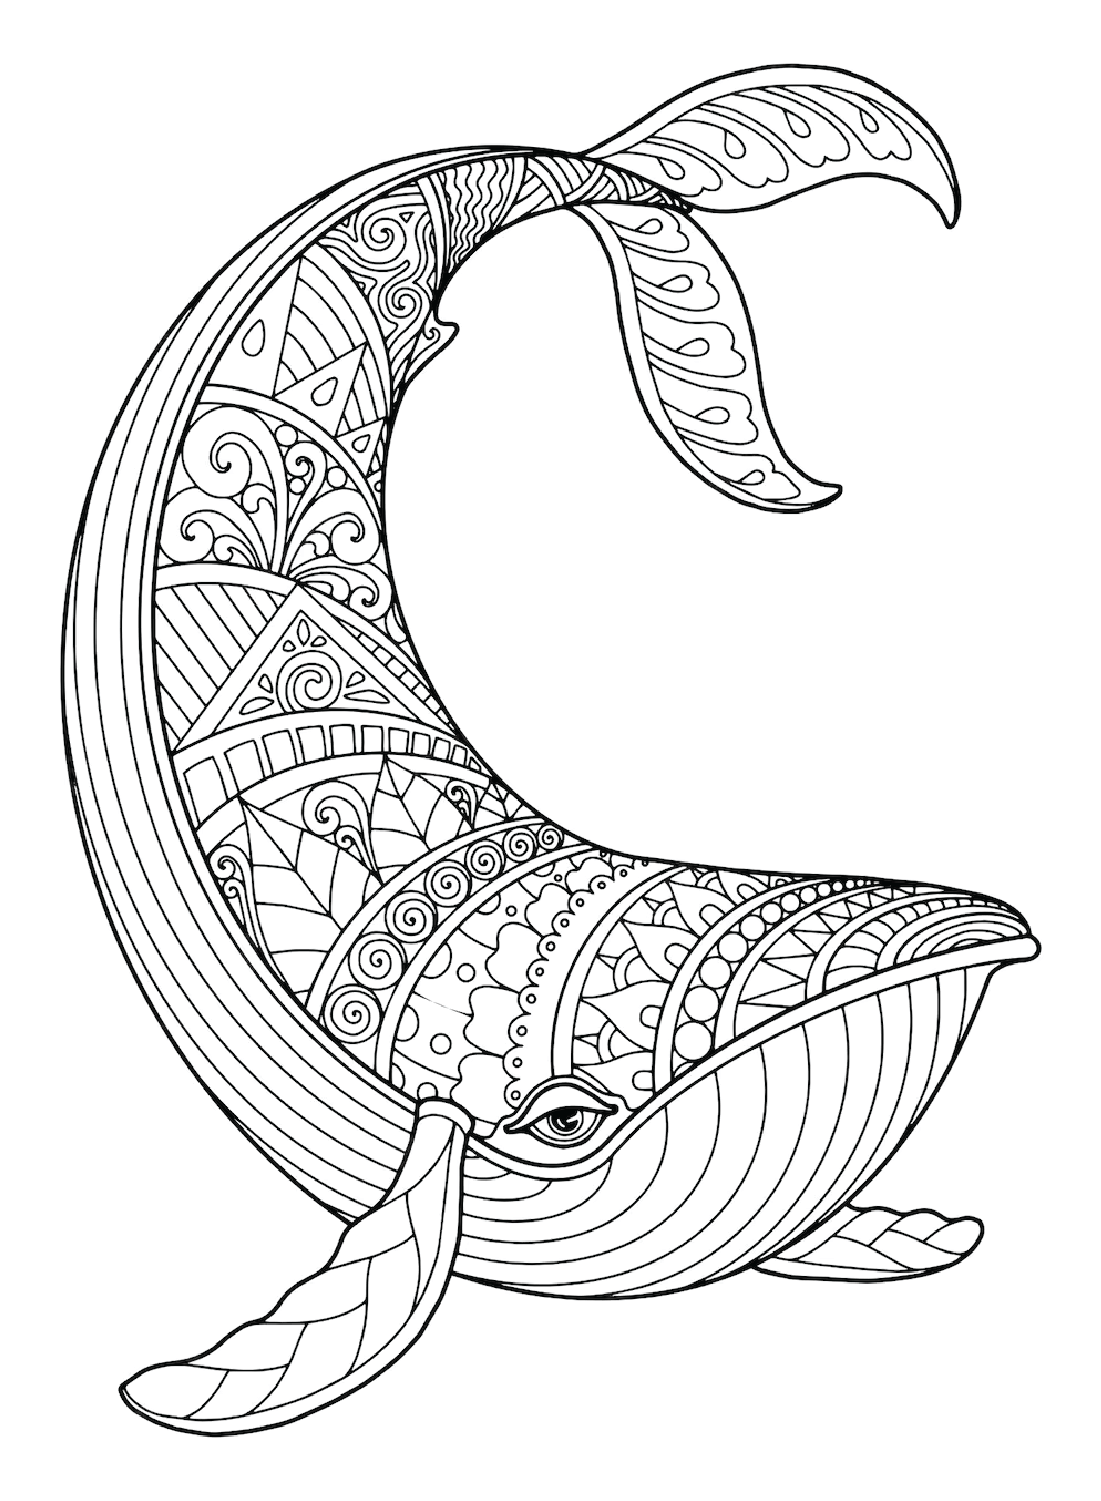 Zentangle Whale from Zentangle Animal